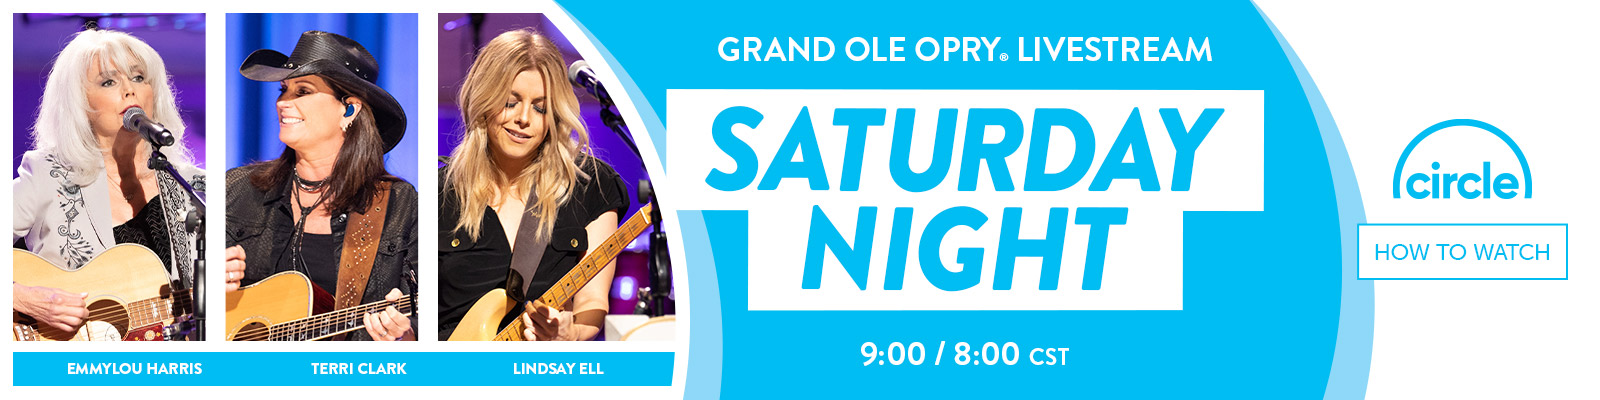 Saturday Night Opry Livestream